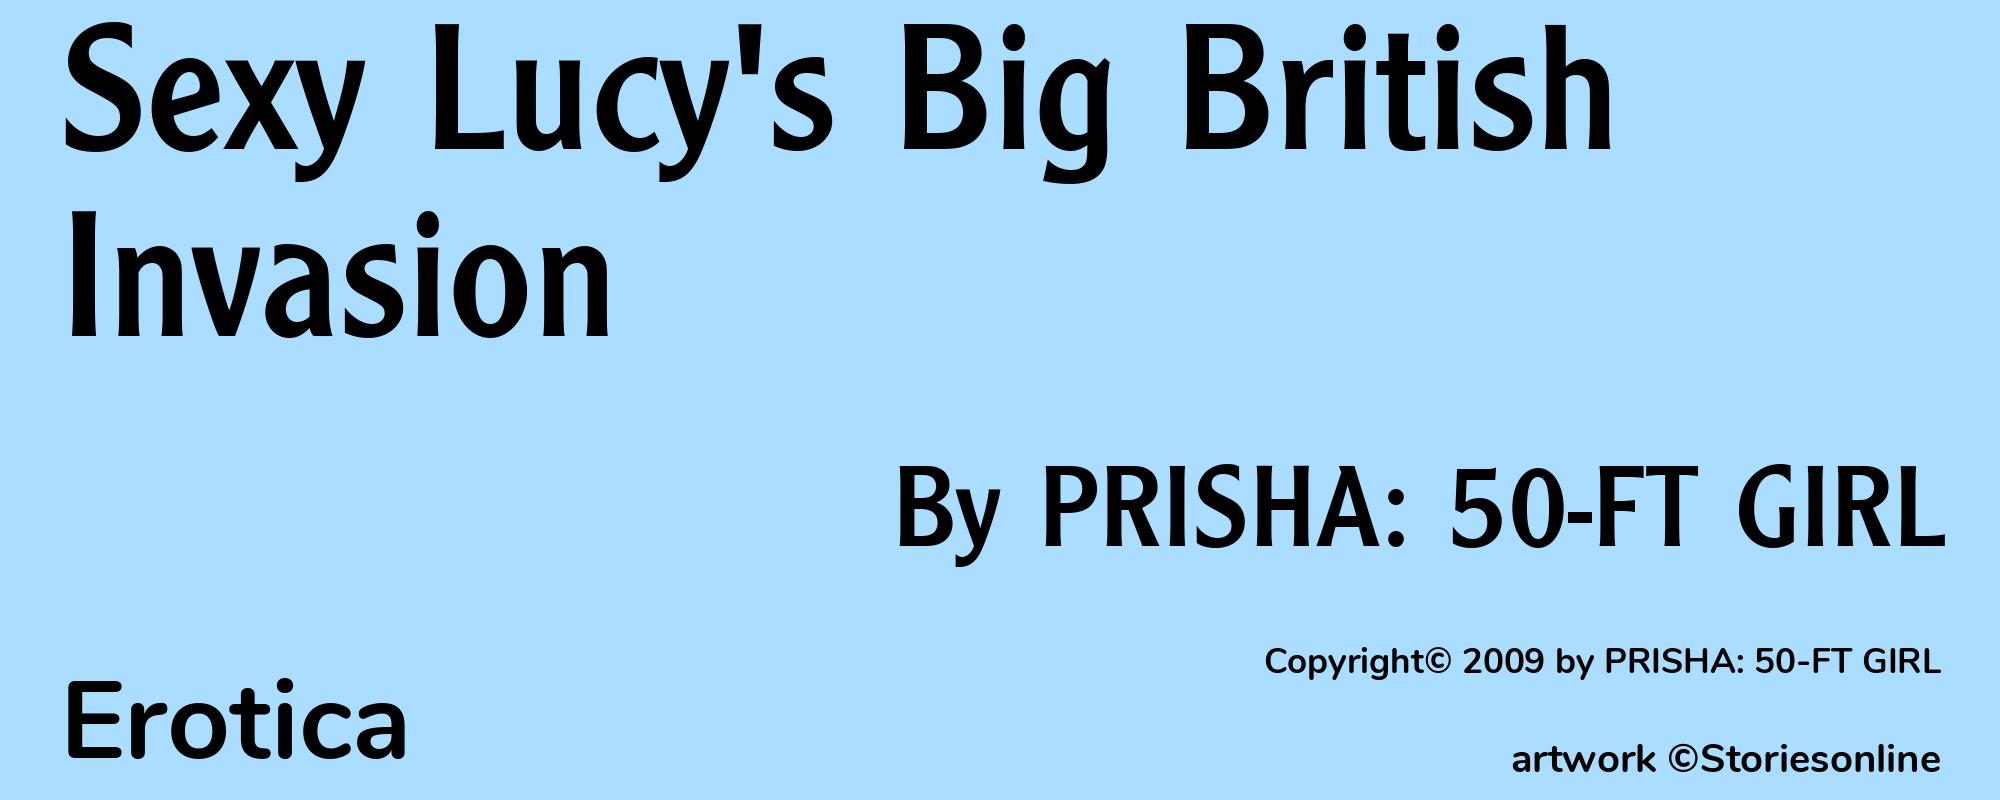 Sexy Lucy's Big British Invasion - Cover